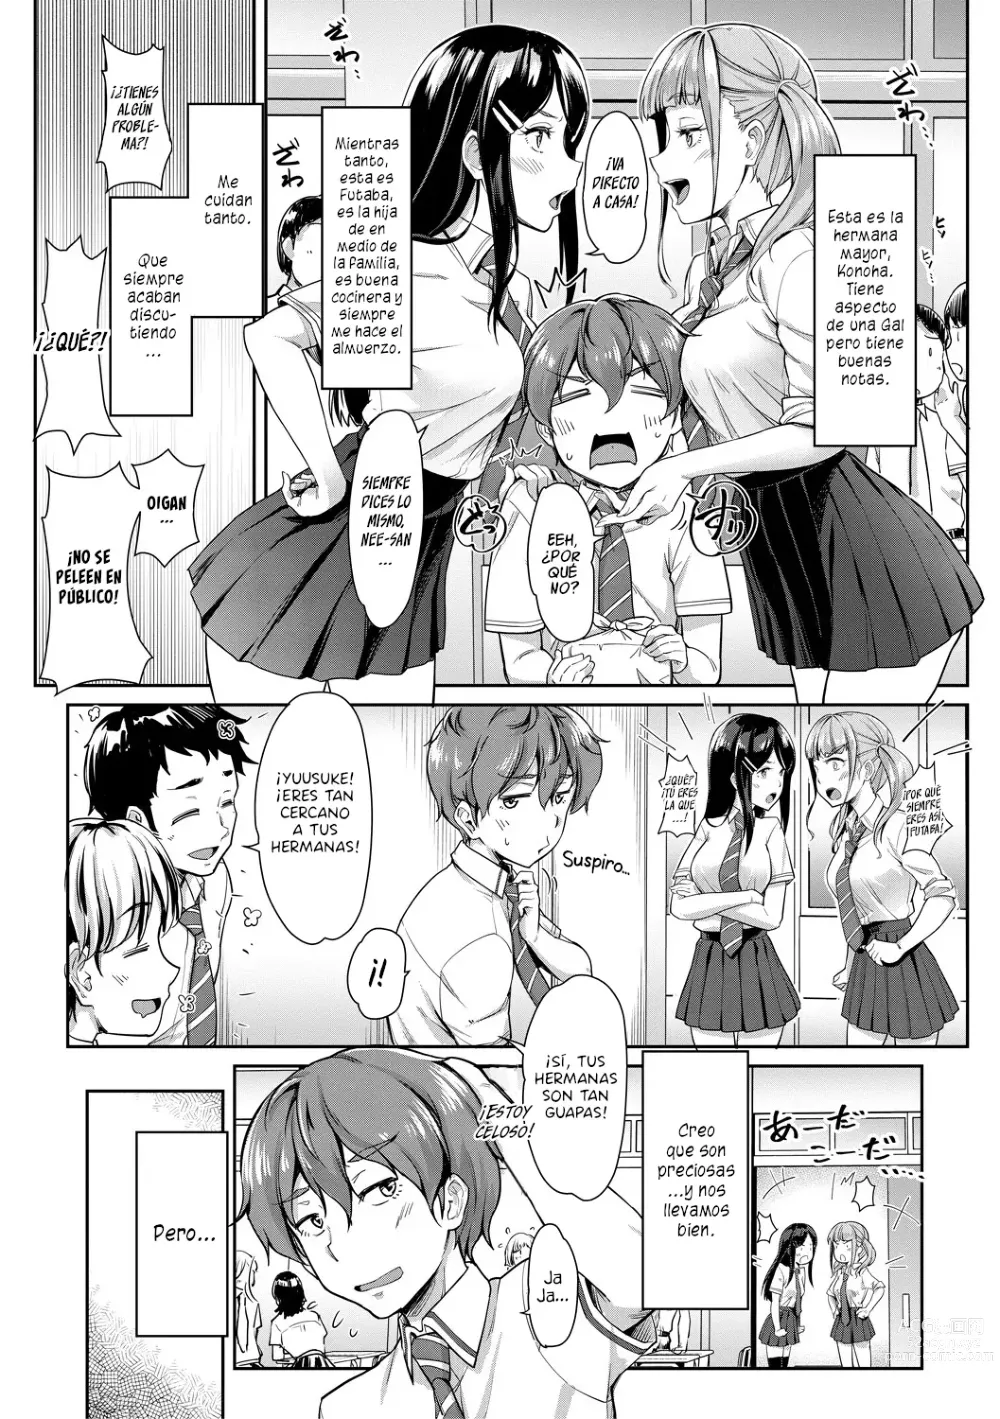 Page 4 of manga ¡Nee! ¡Nee! ¡Chantoshiyo!